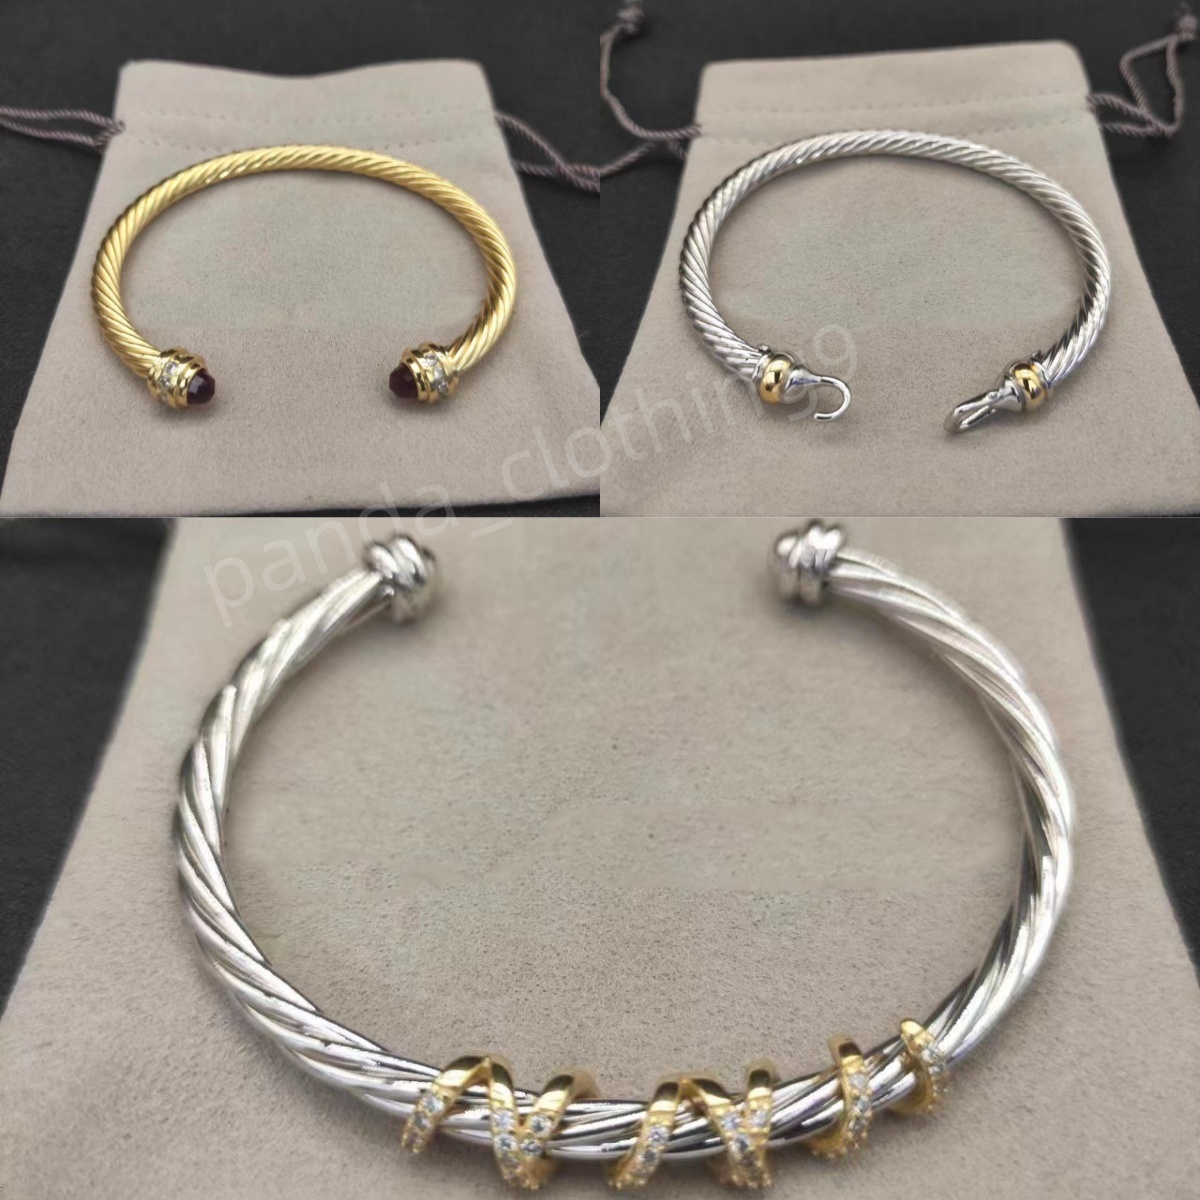 Jewelry Bangle David designer bracelet for Women High Quality Mens bracelet designer Station Cable Cross Collection cable bracelets fashion simple design